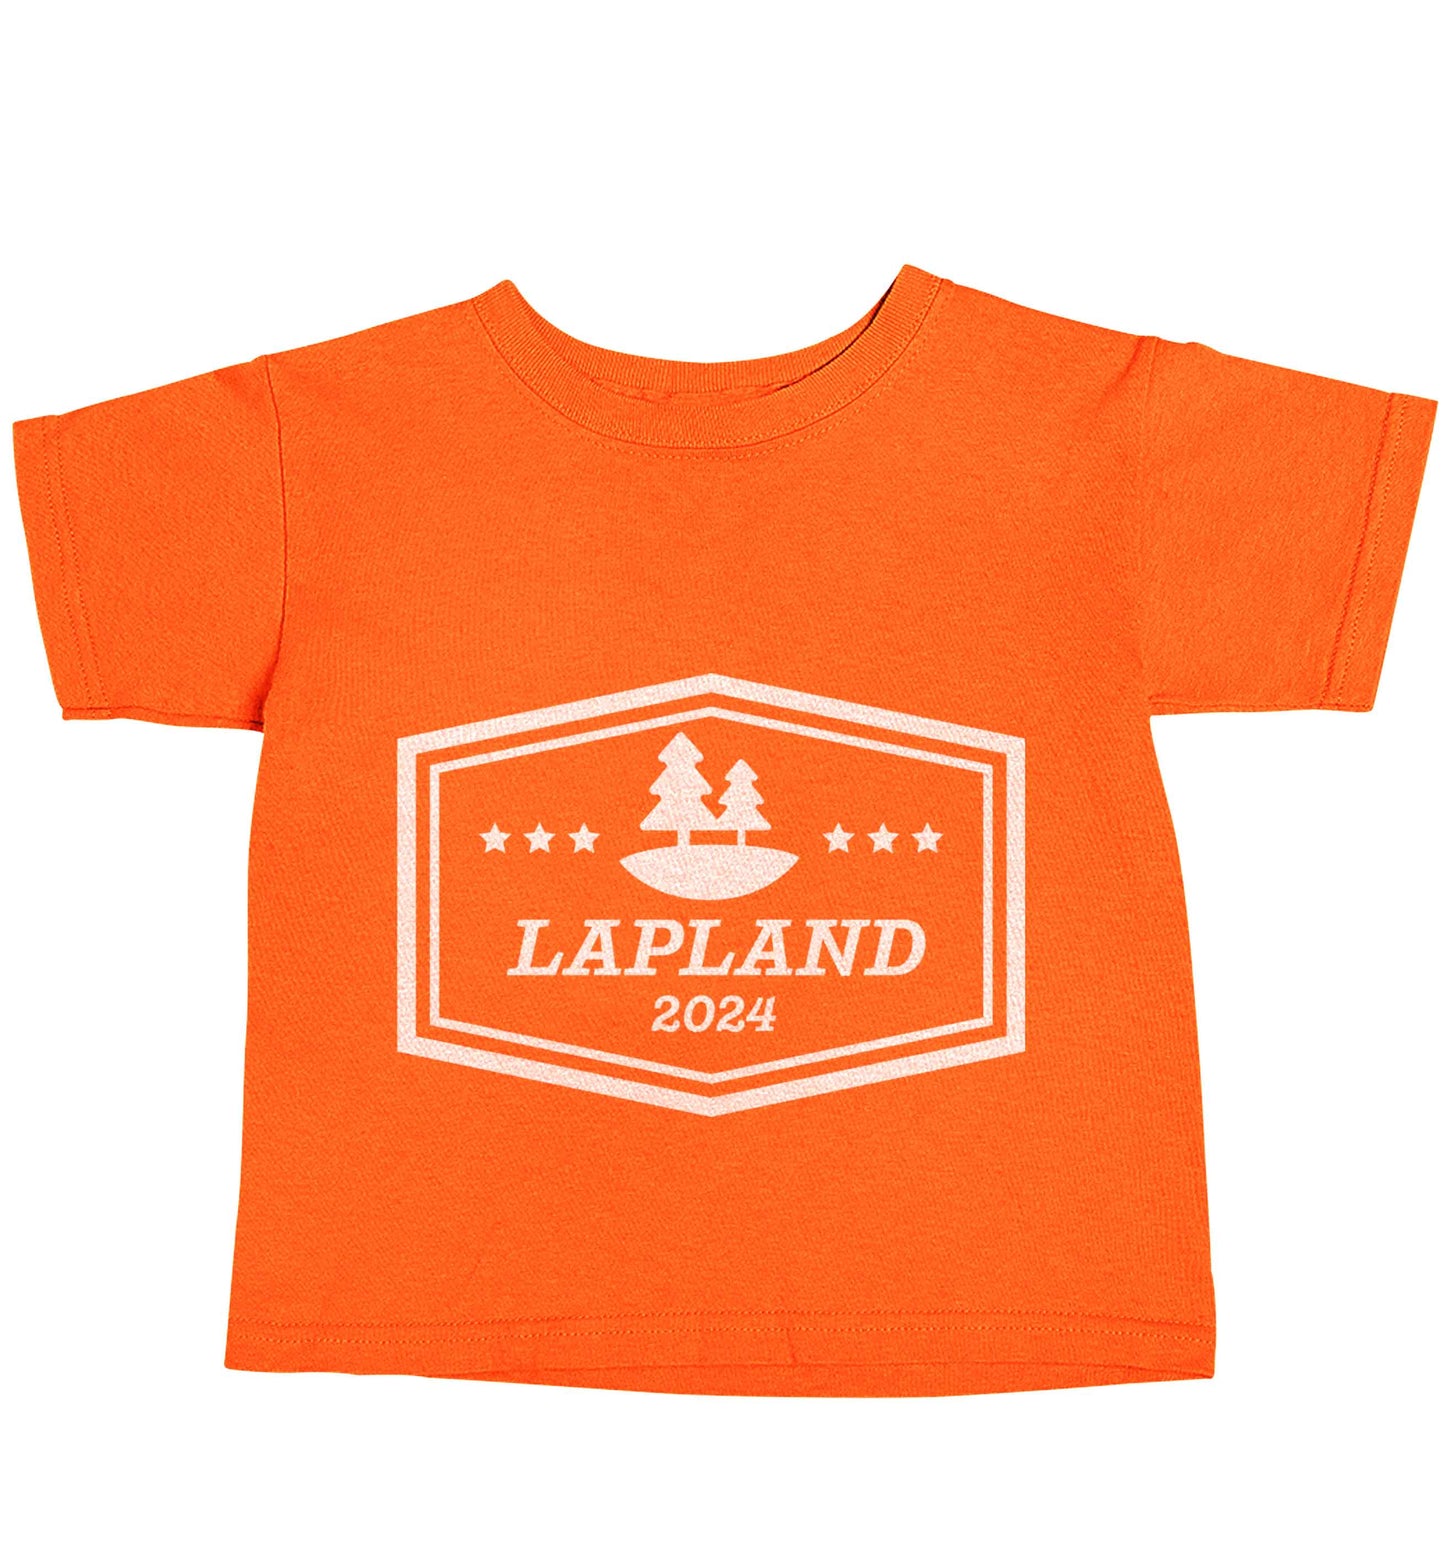 Custom date Lapland orange baby toddler Tshirt 2 Years